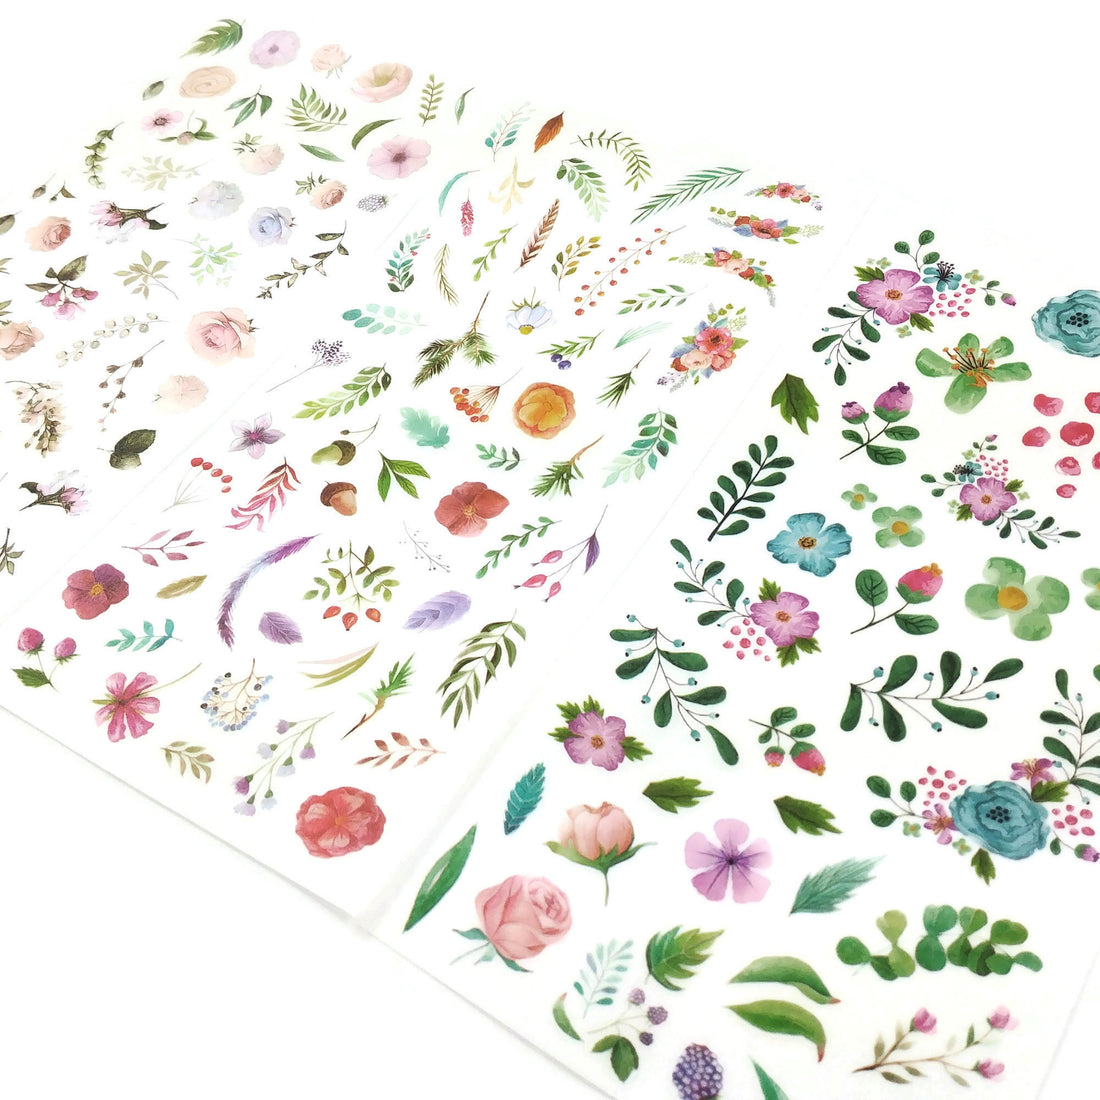 Flowers garden sticker set - 3 sheets of watercolor stickers